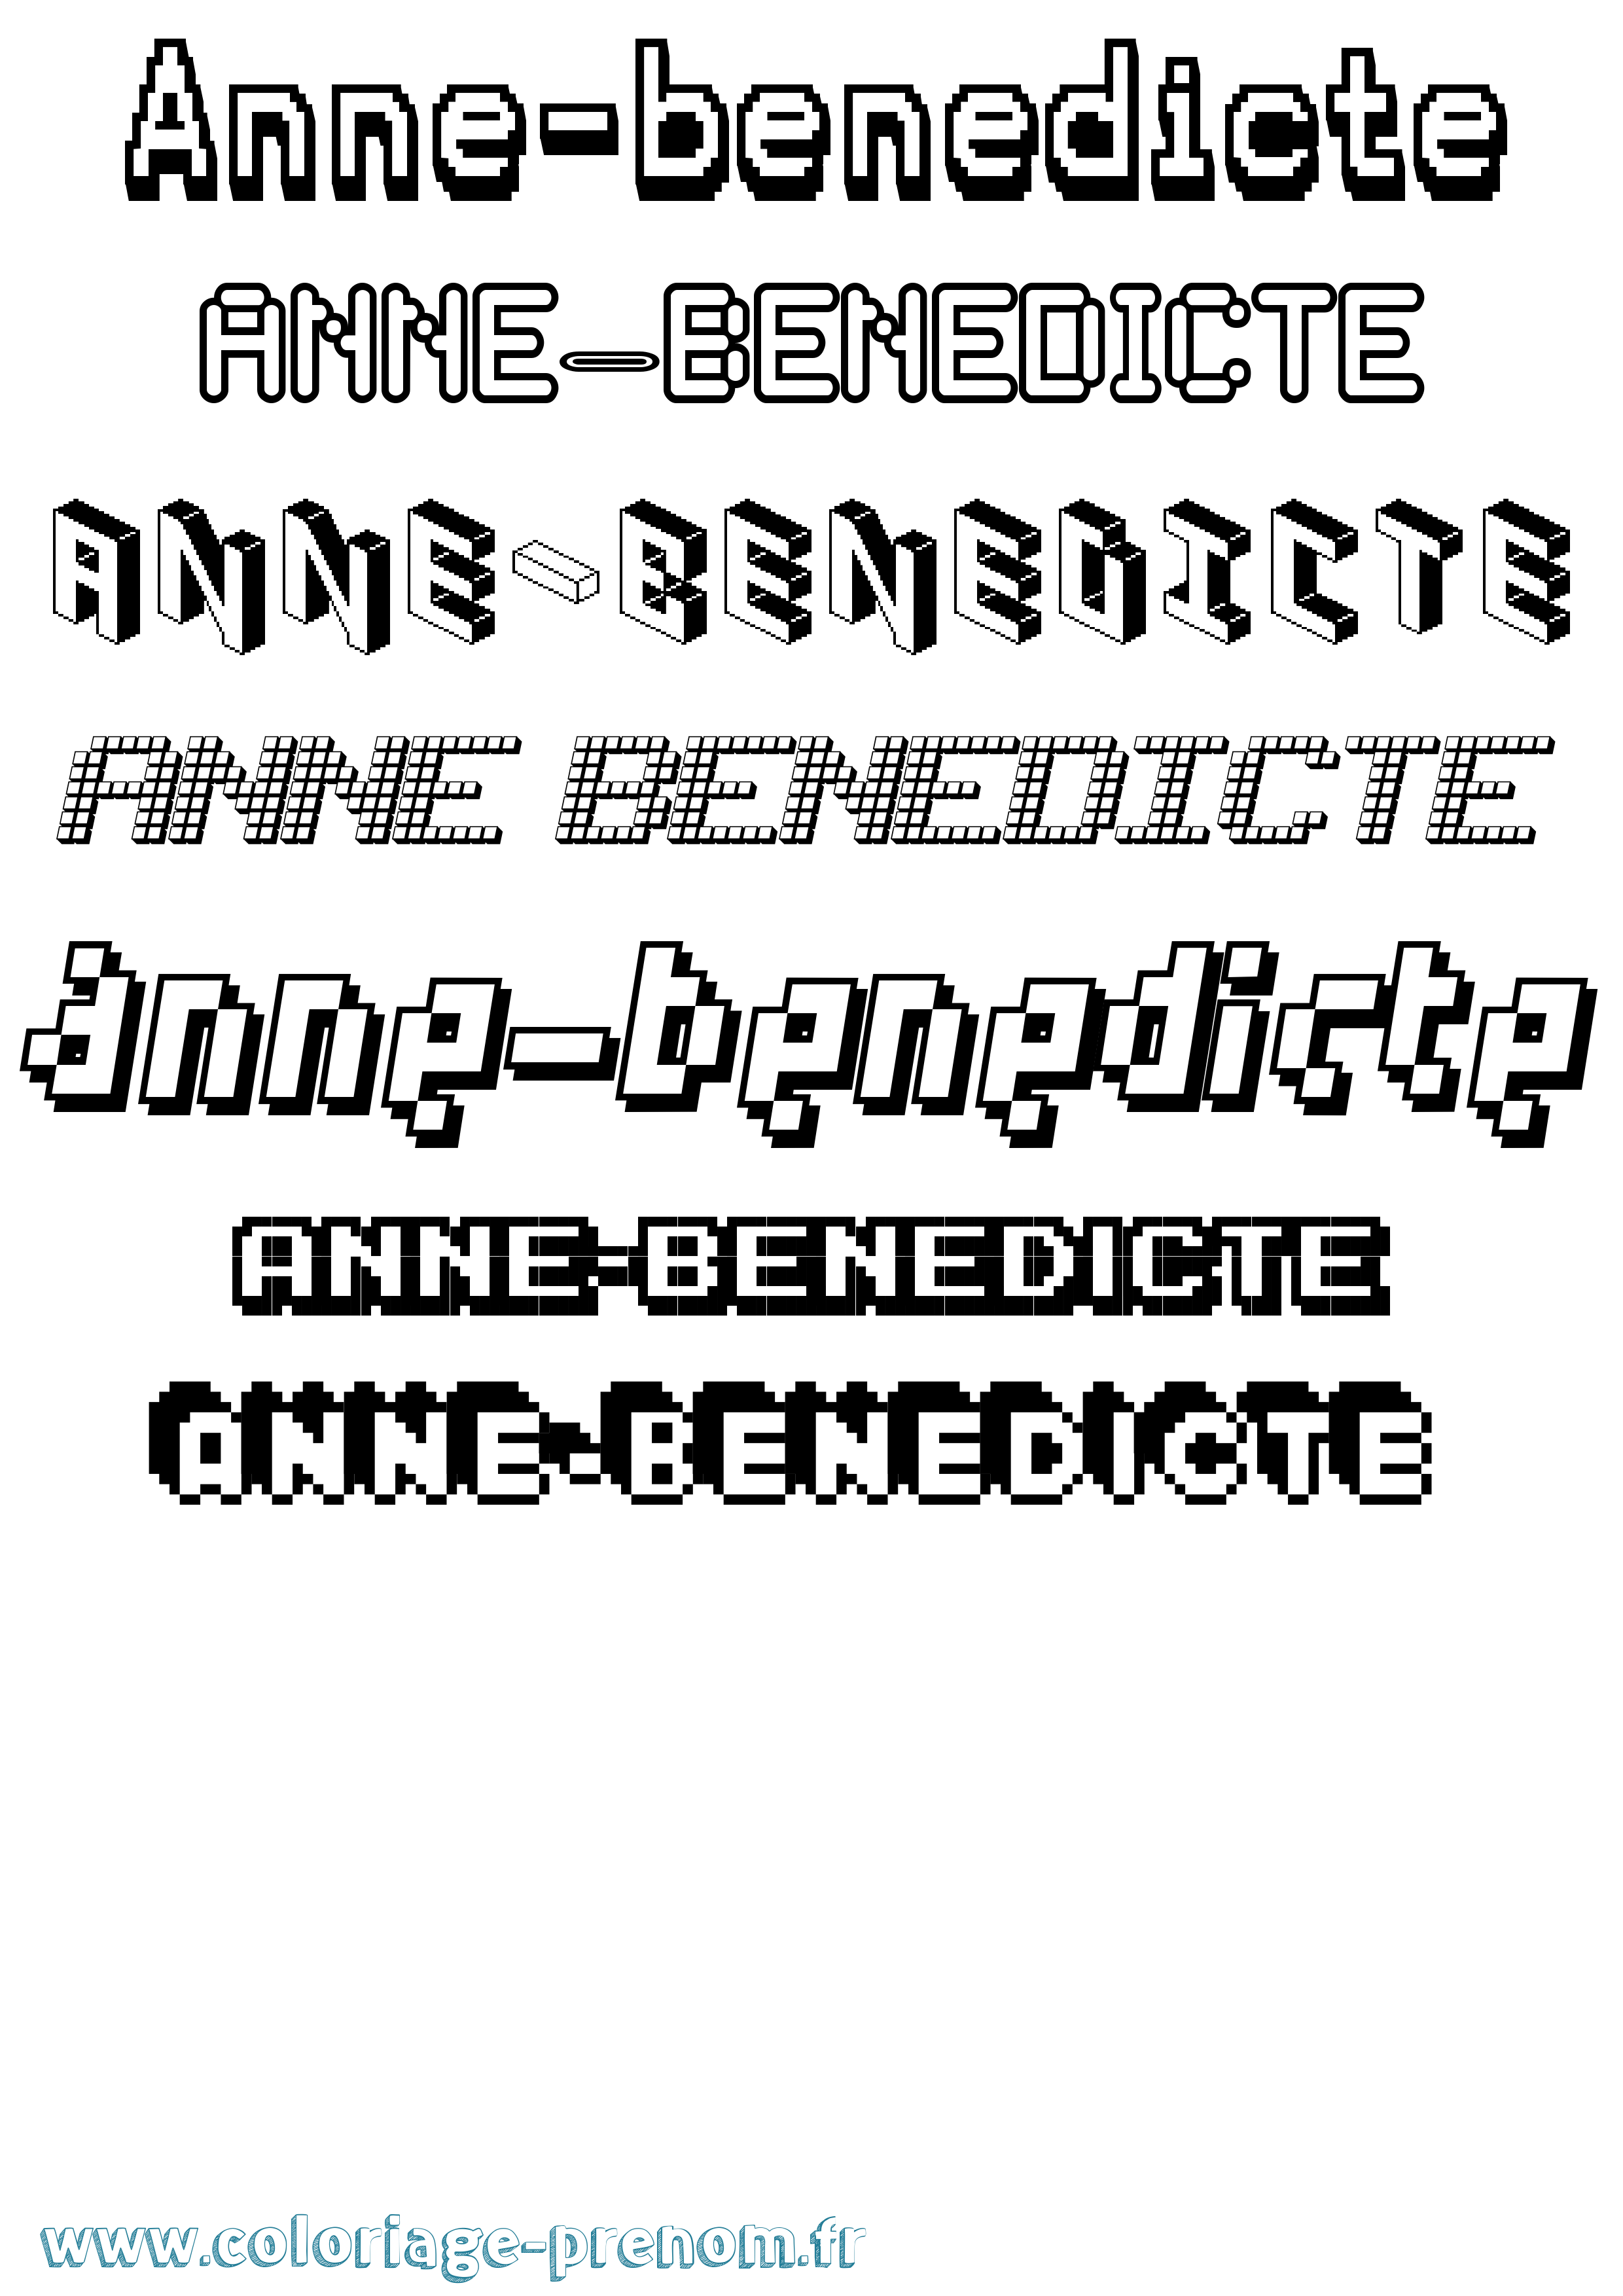 Coloriage prénom Anne-Benedicte Pixel